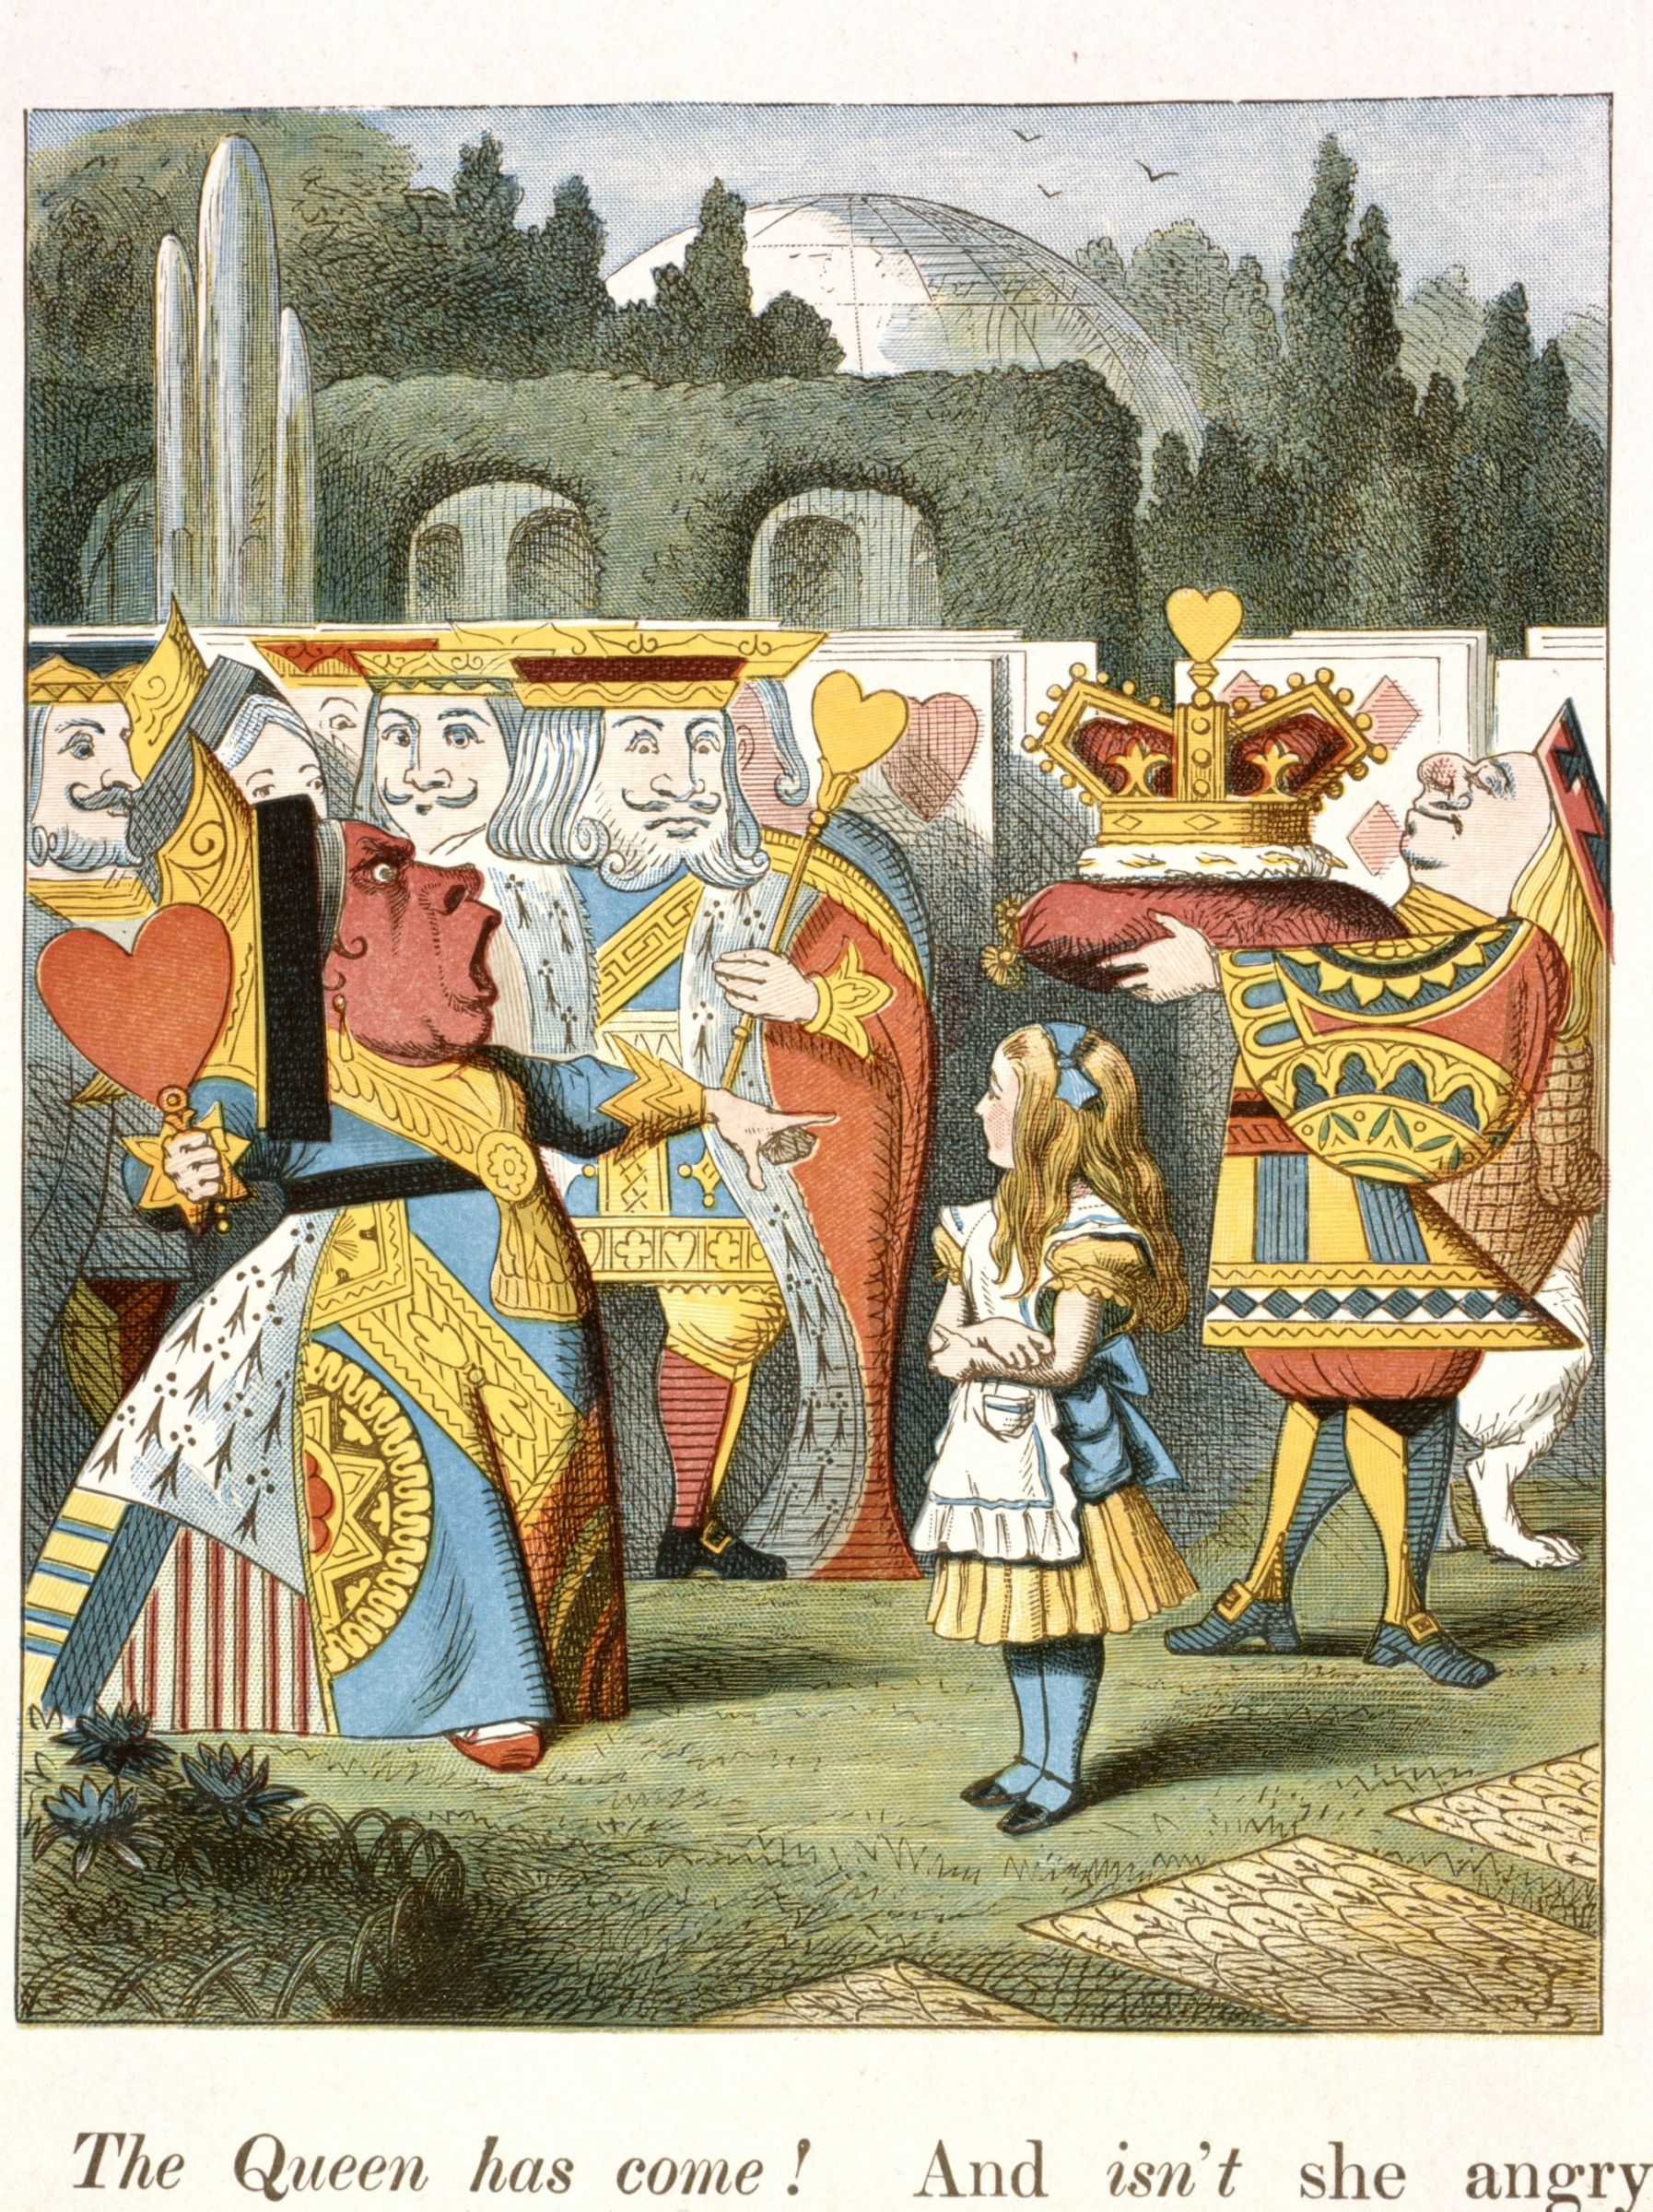 Ilustração original de John Tenniel para "The Adventures of Alice in Wonderland", escrito por Lewis Carroll